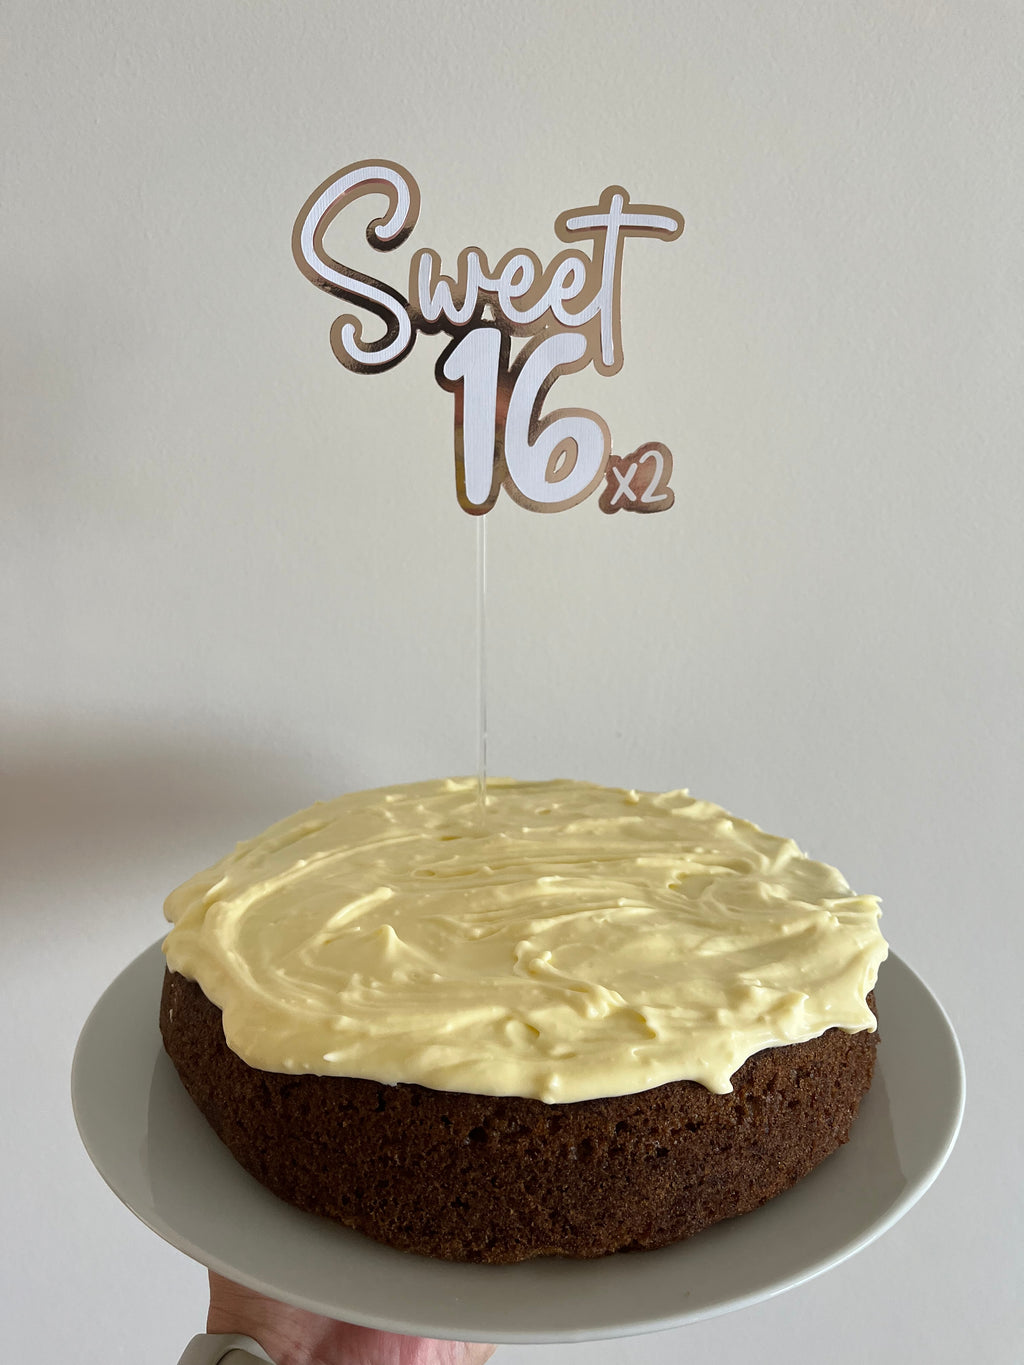 Sweet 16 x2 (32) cake topper